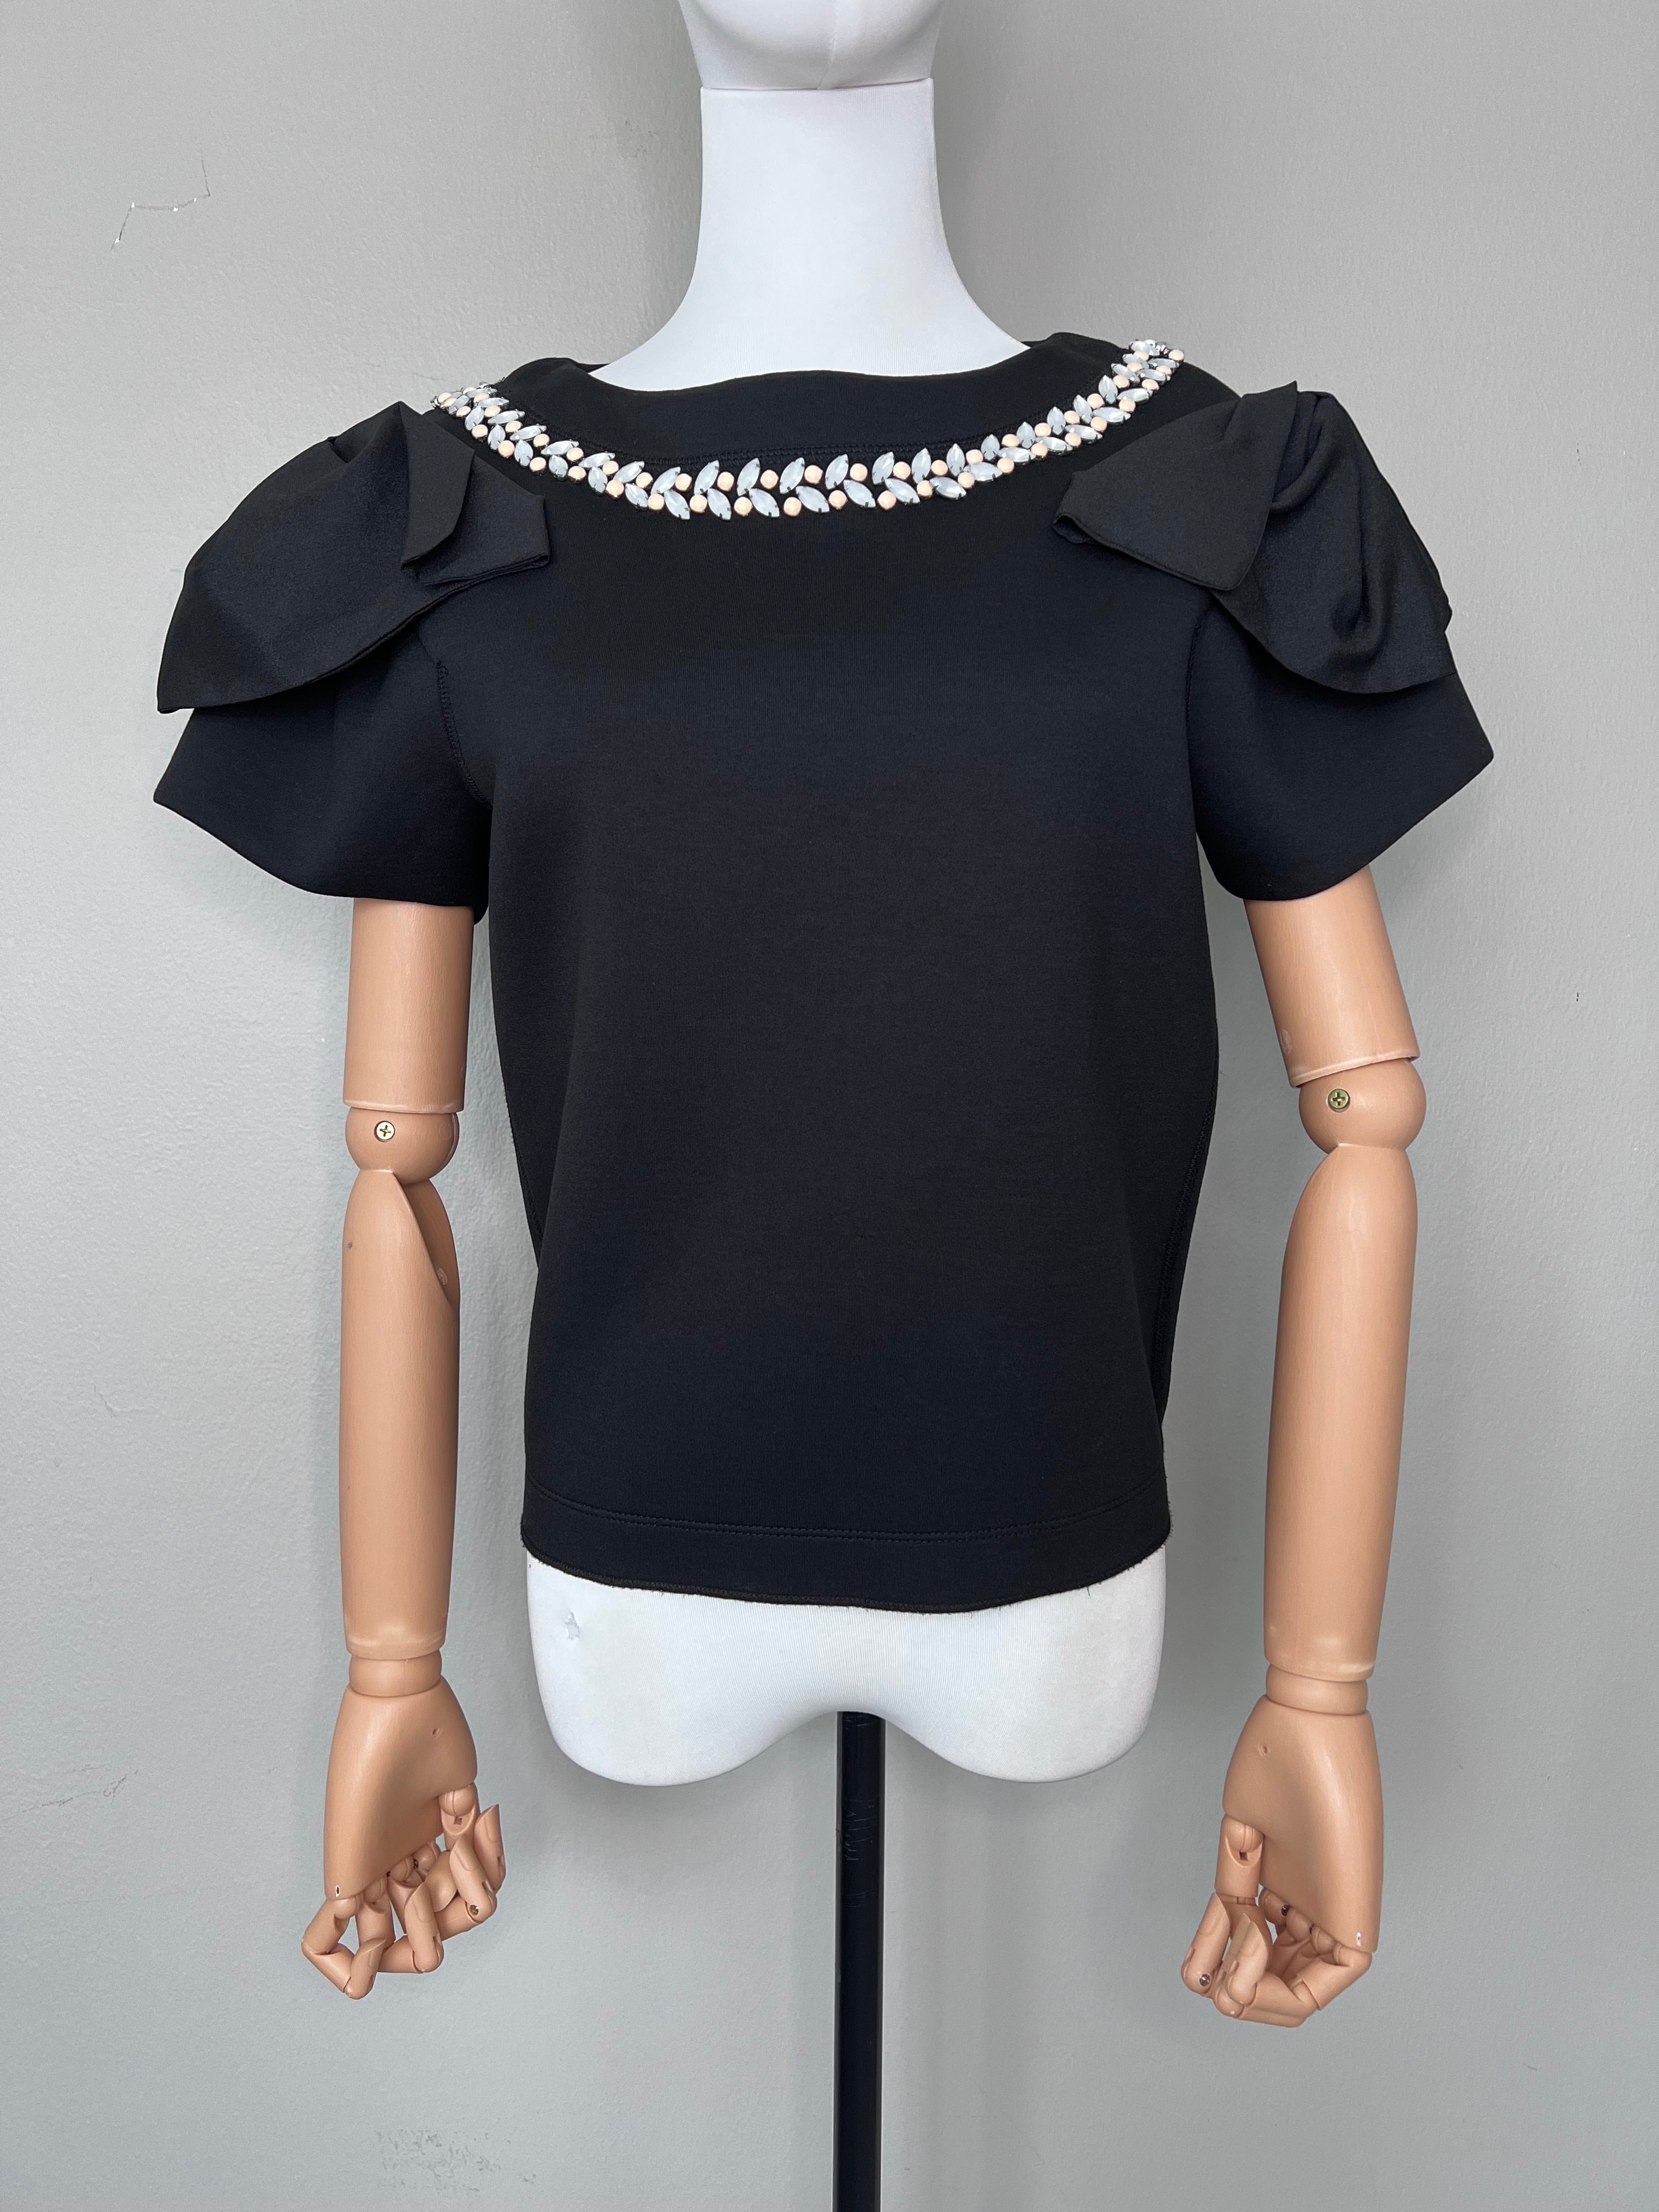 Black top with design on shoulder and gemstones across neckline - PINKO